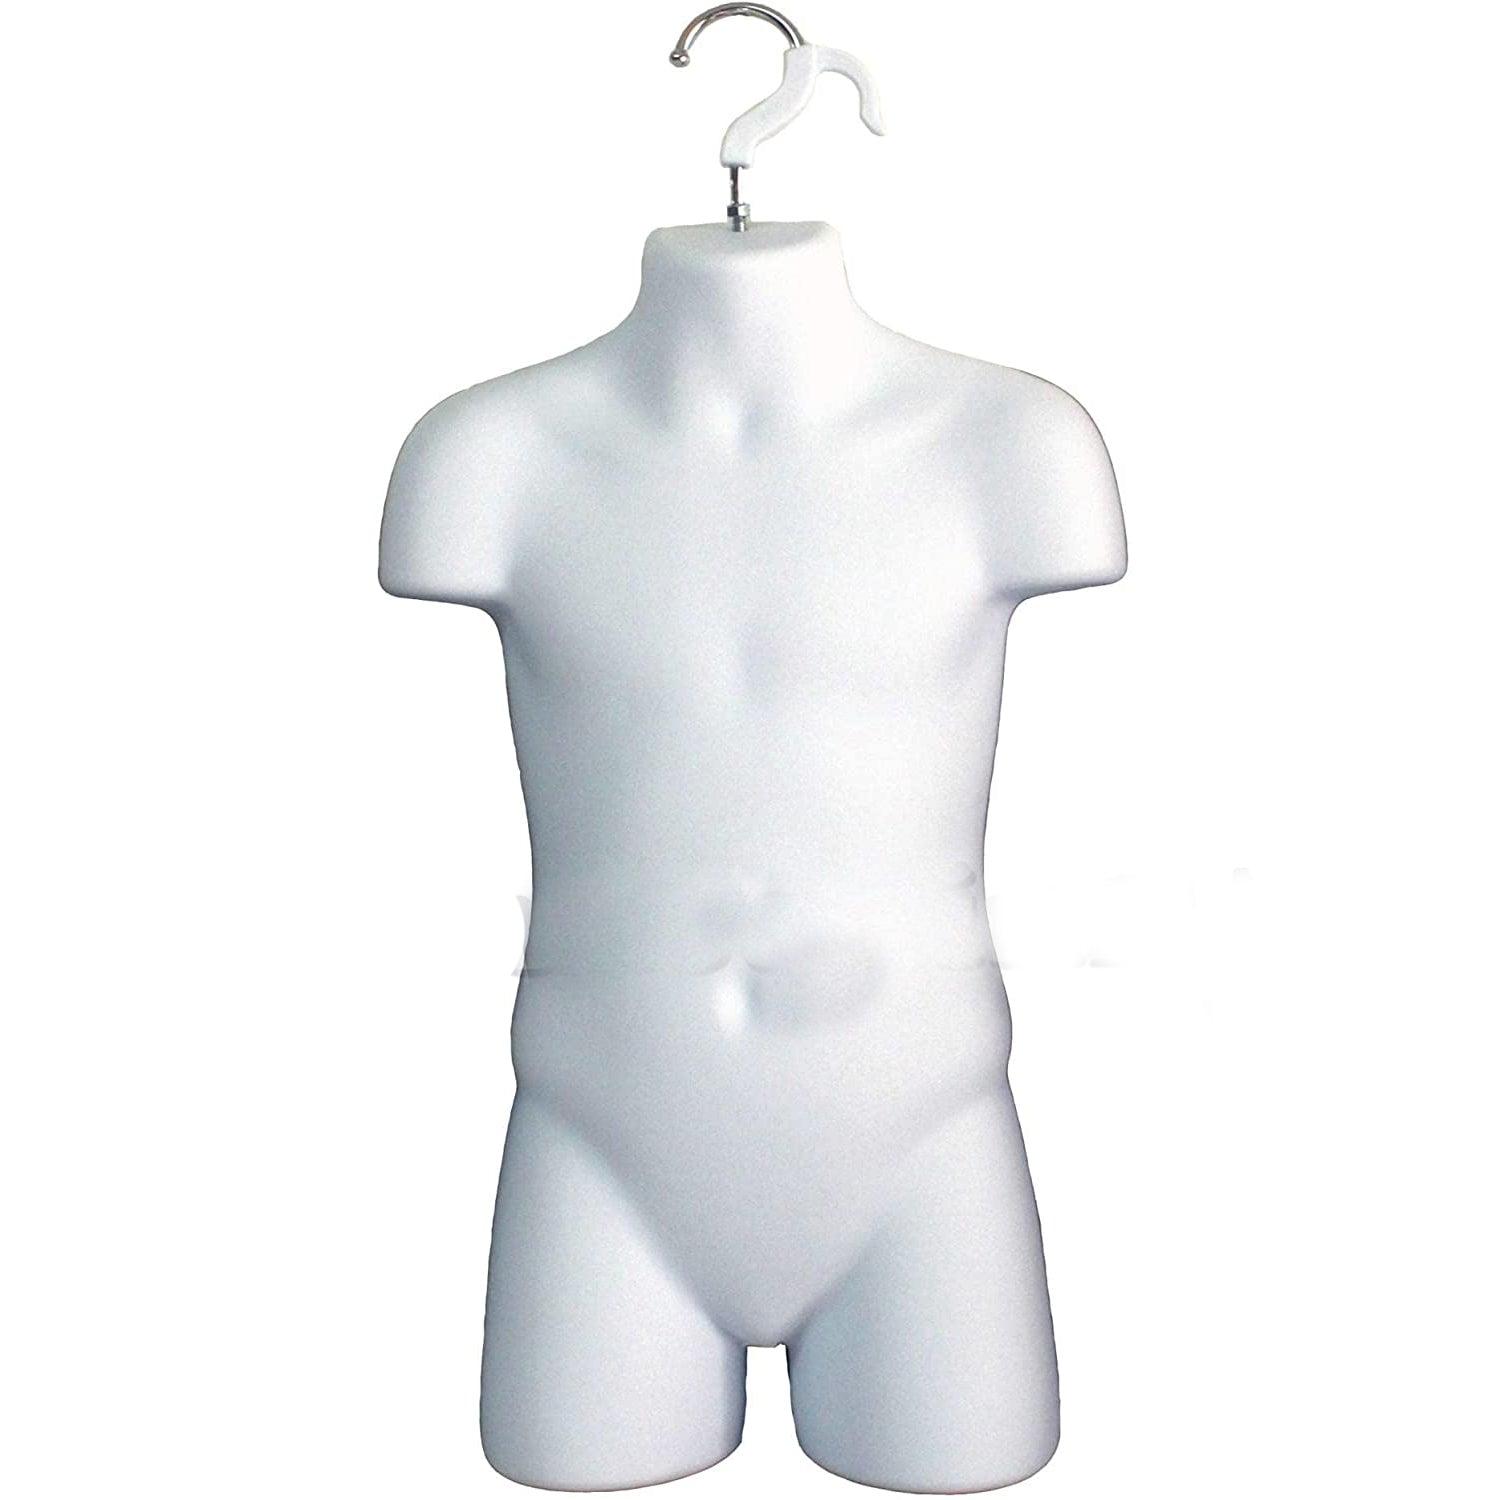 Torso Female Male Body Mannequin Forms Set Waist Long for S-M Sizes White